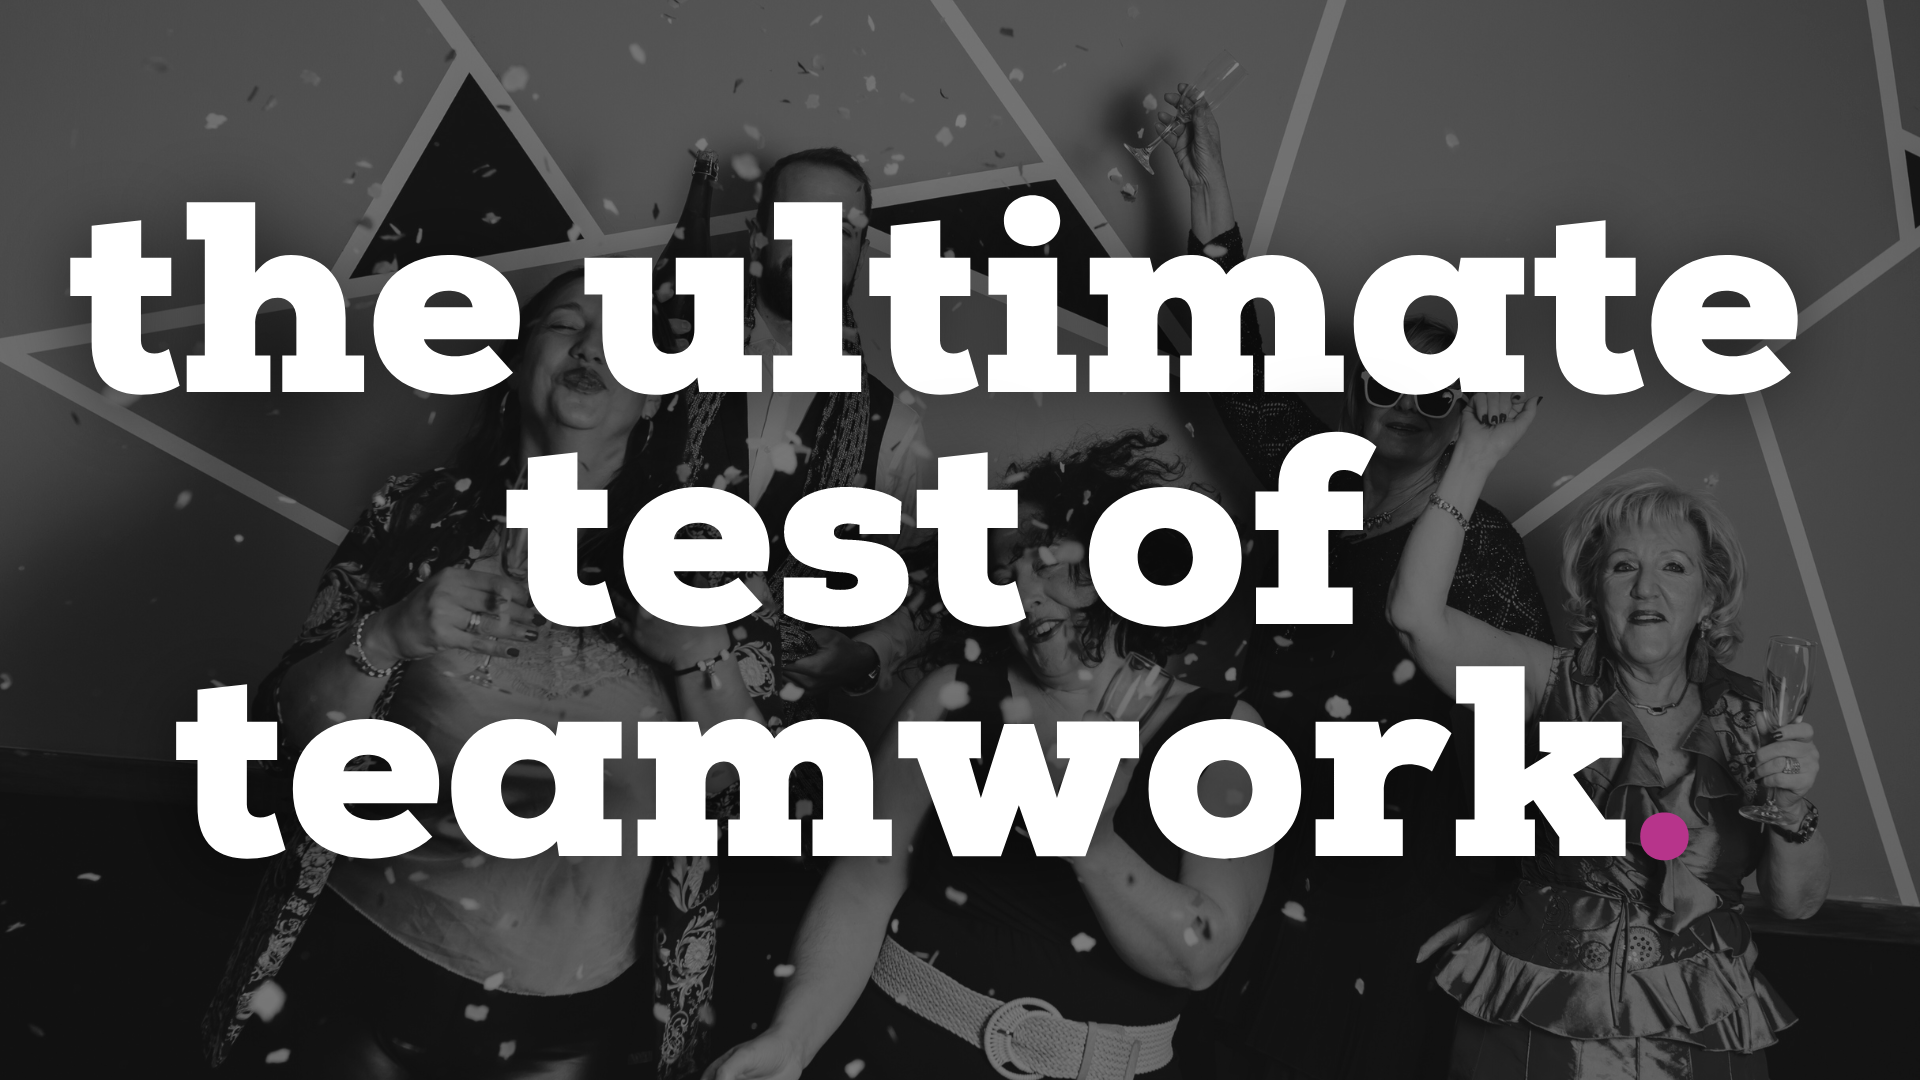 Team Building - Ultimate Test